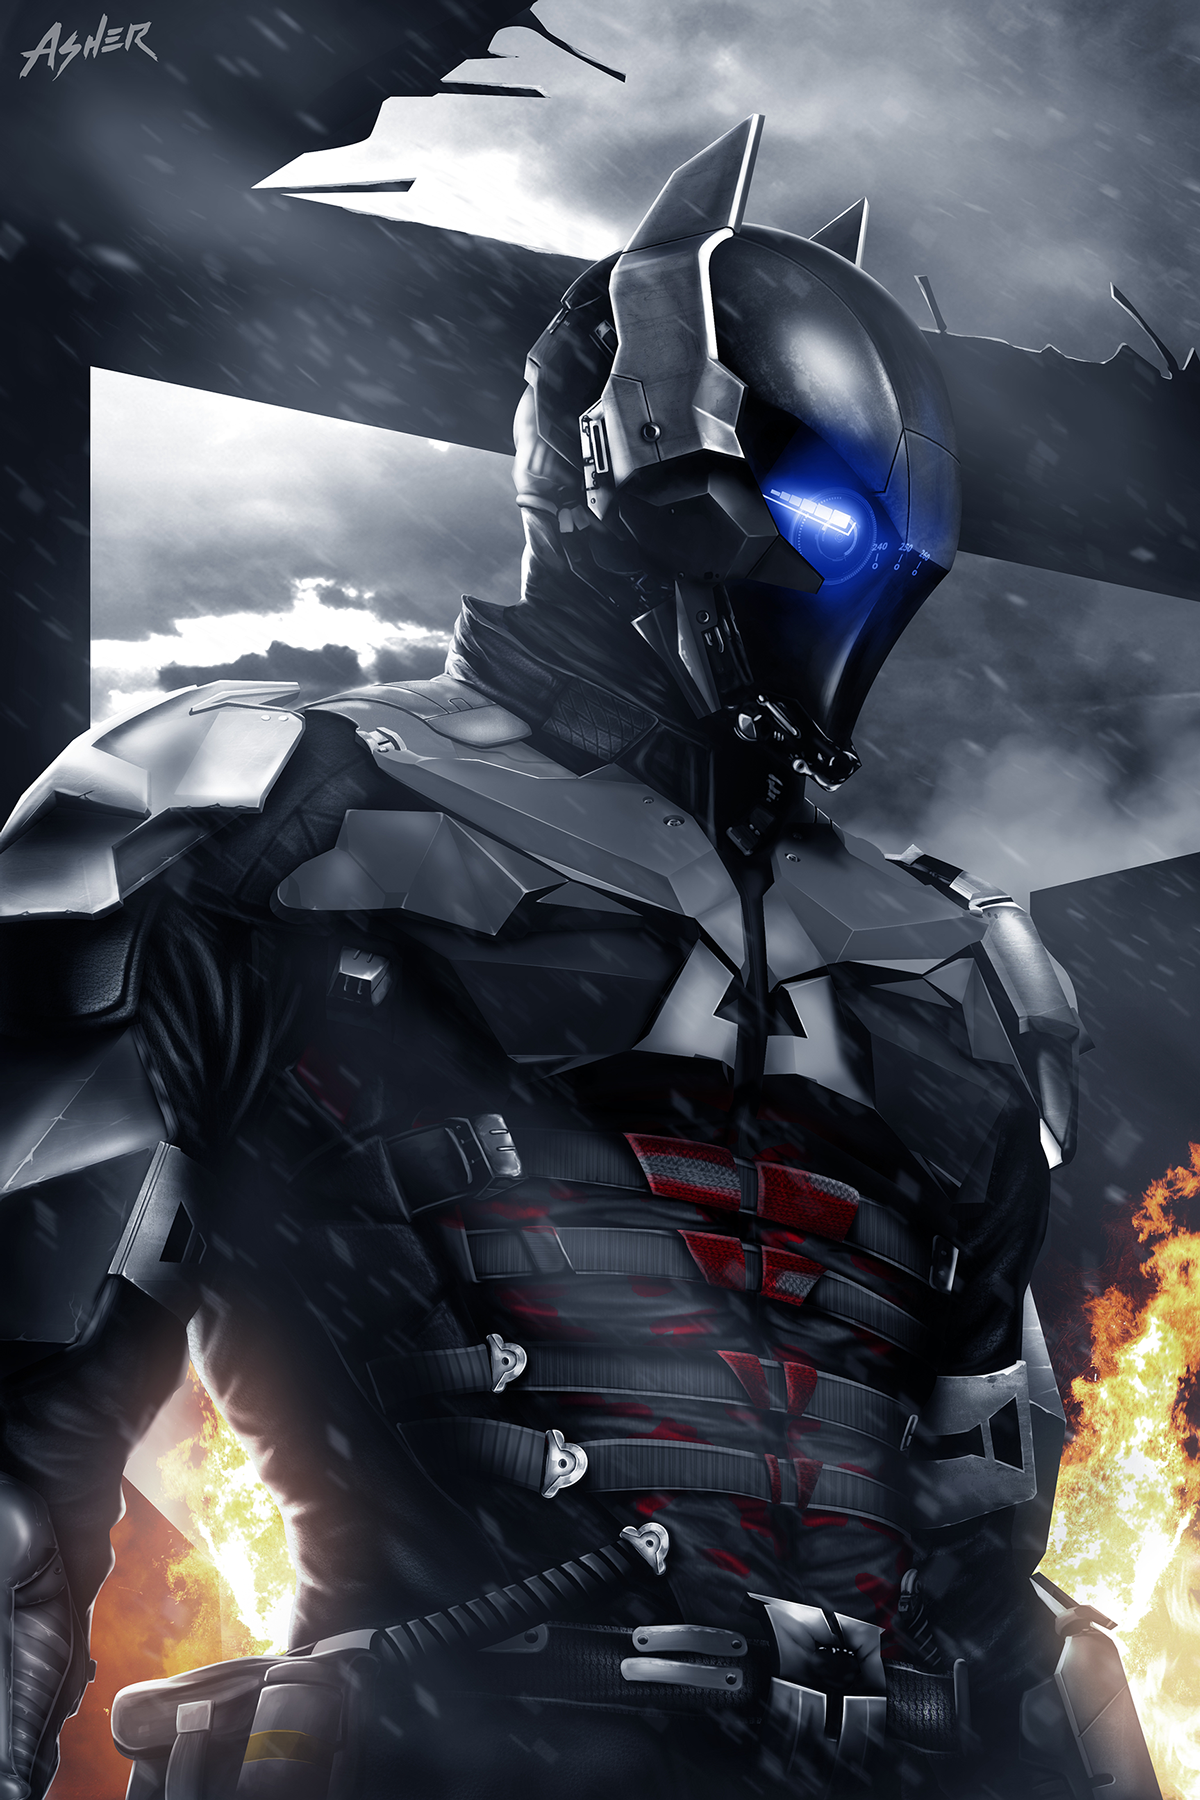 asher alpay art of batman dc Arkham knight Hero villain comics